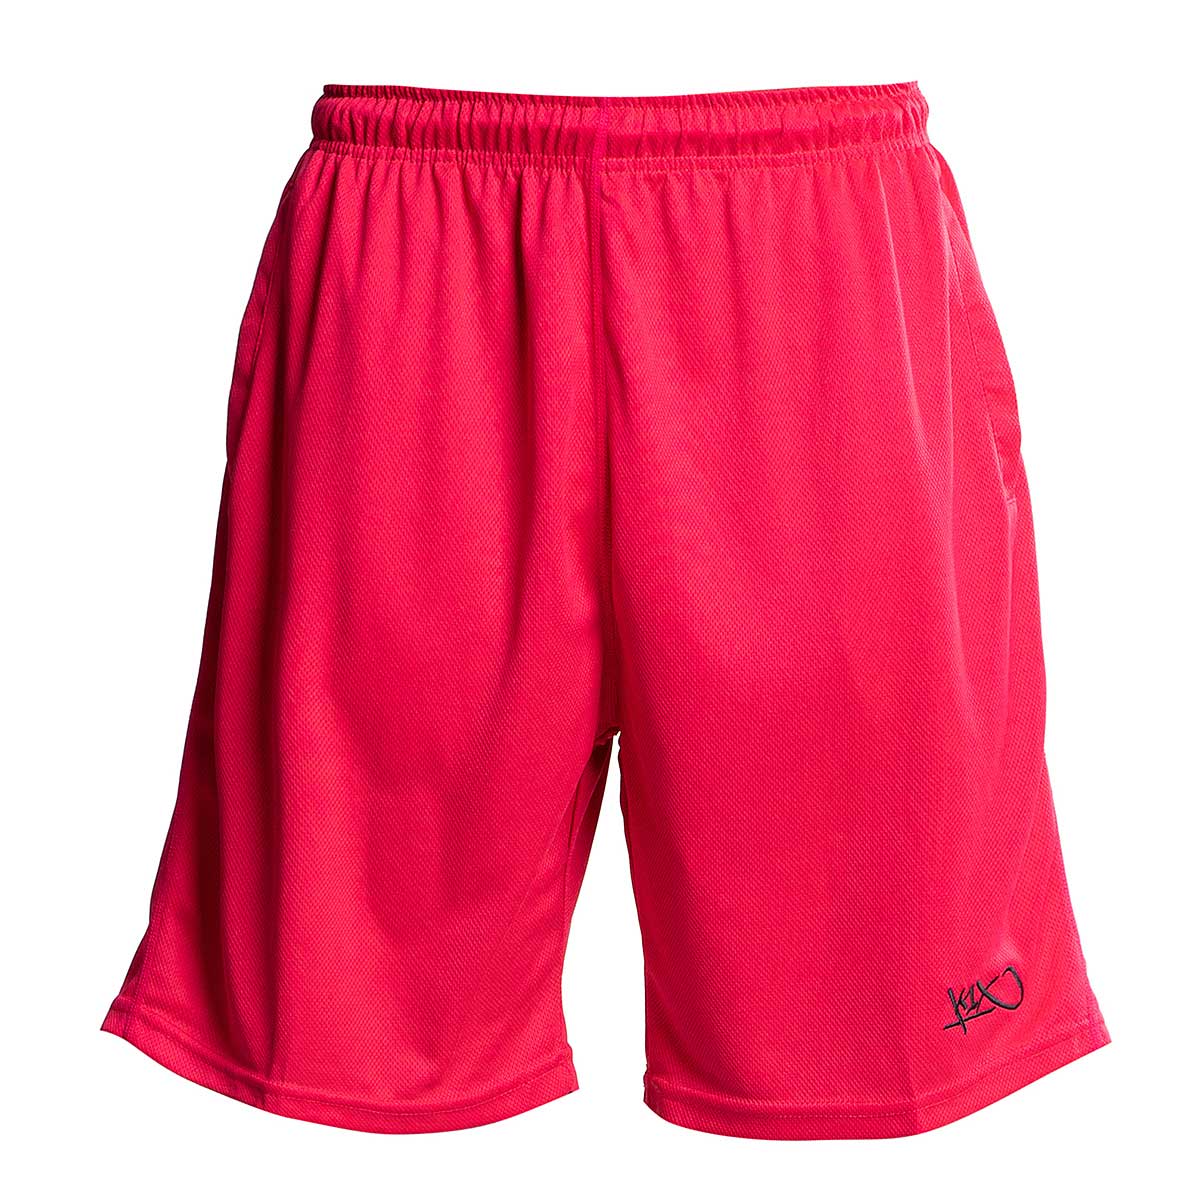 K1X New Micromesh Shorts, Virtual Pink